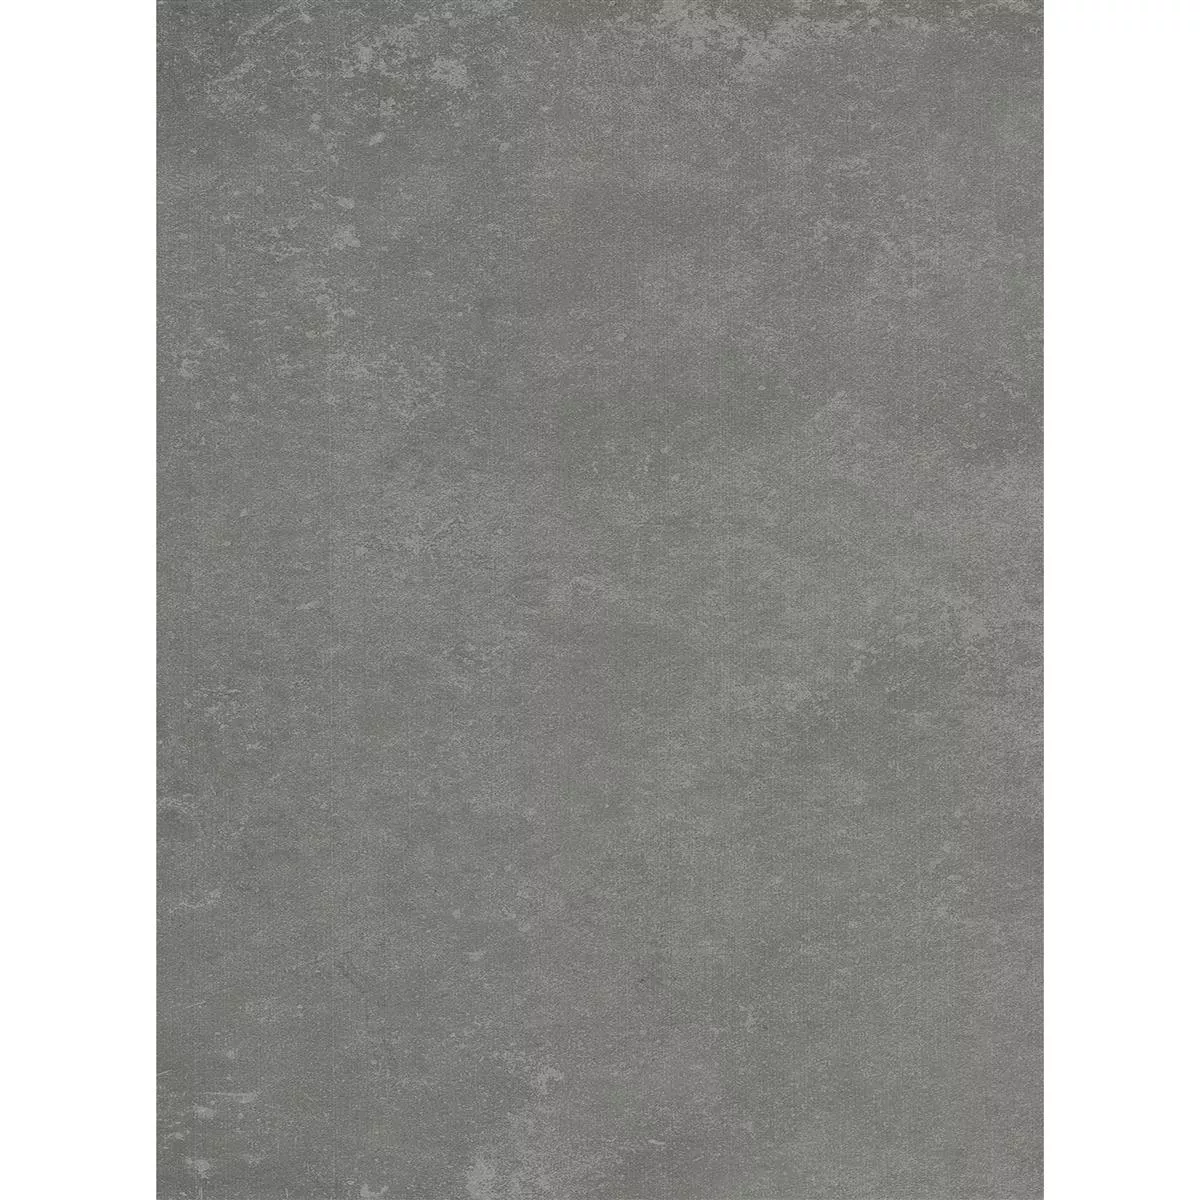 Vloertegels Nepal Donkergrijs 60x120x0,7cm